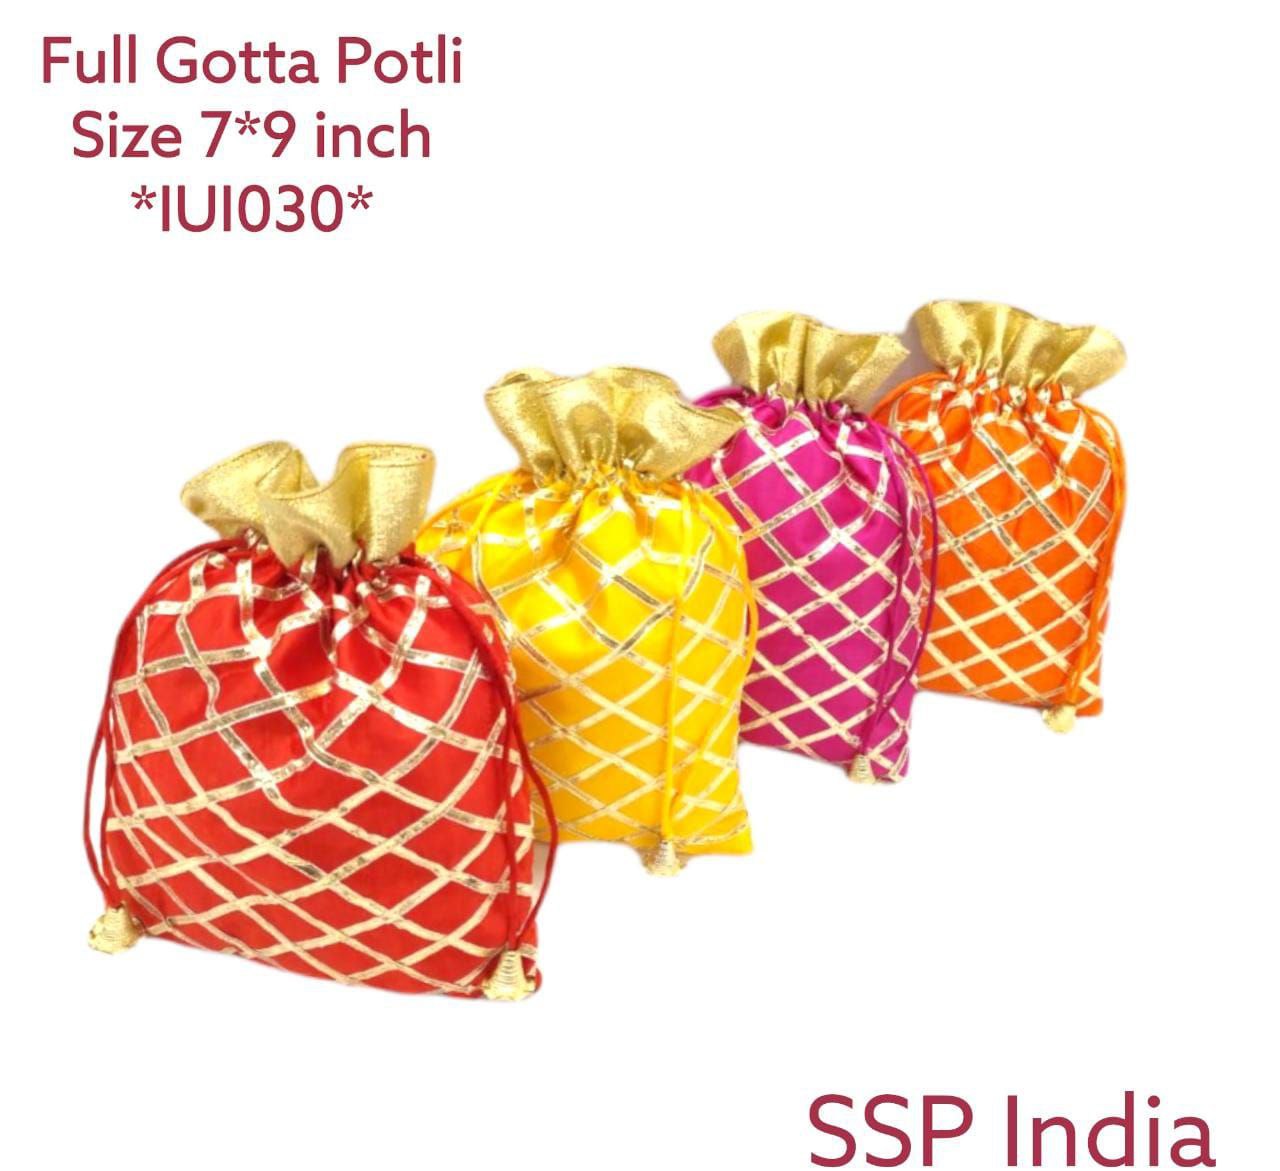 Full Gotta Potli (48 Pcs) Or Ssp Return Gifts